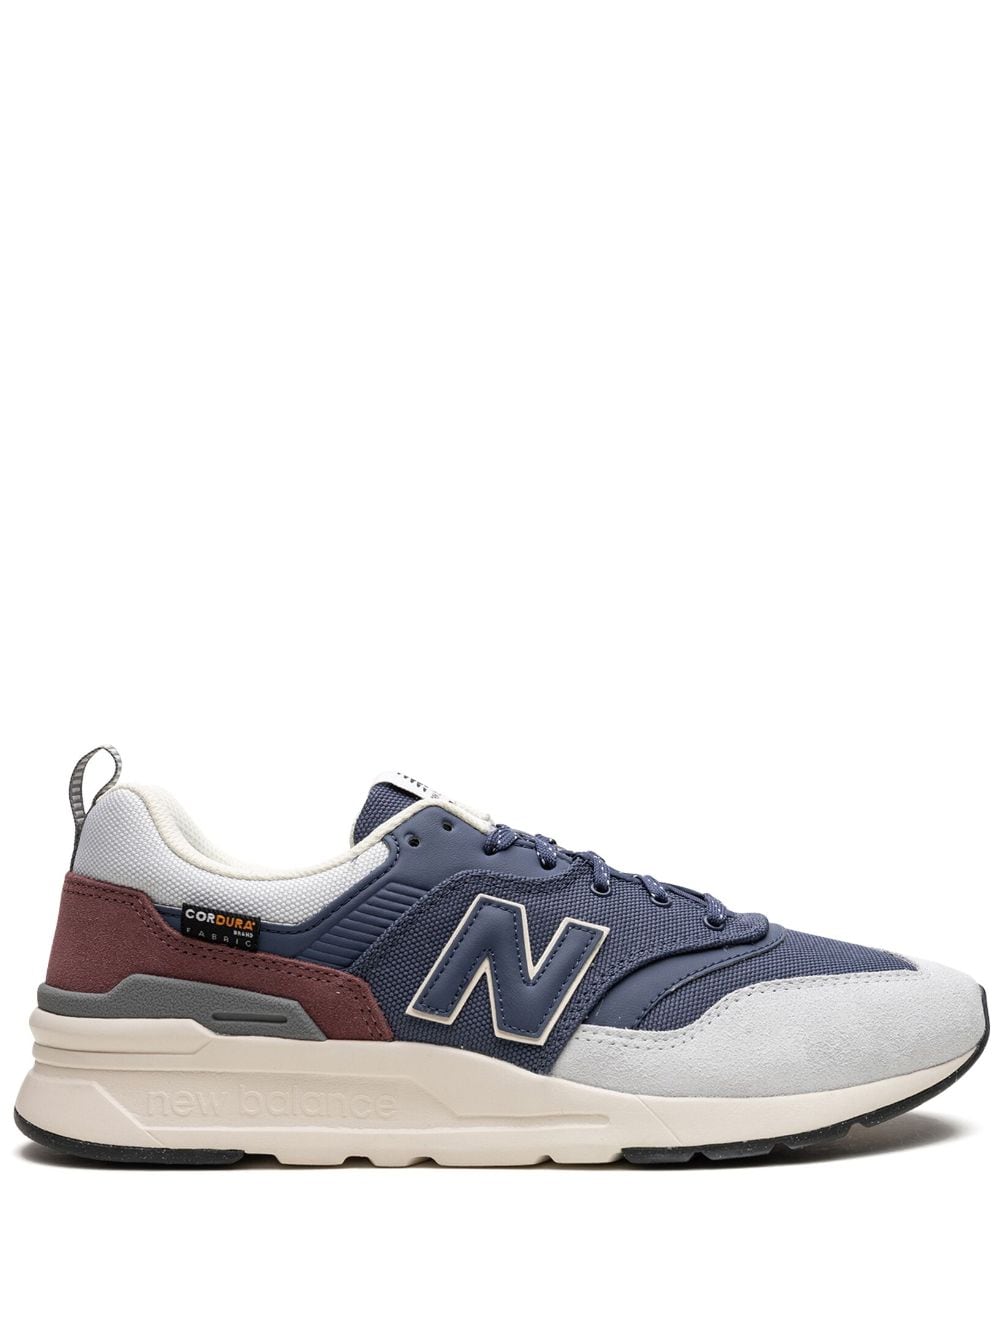 New Balance NB 997 "Vintage Indigo Quartz Grey" sneakers - Blue